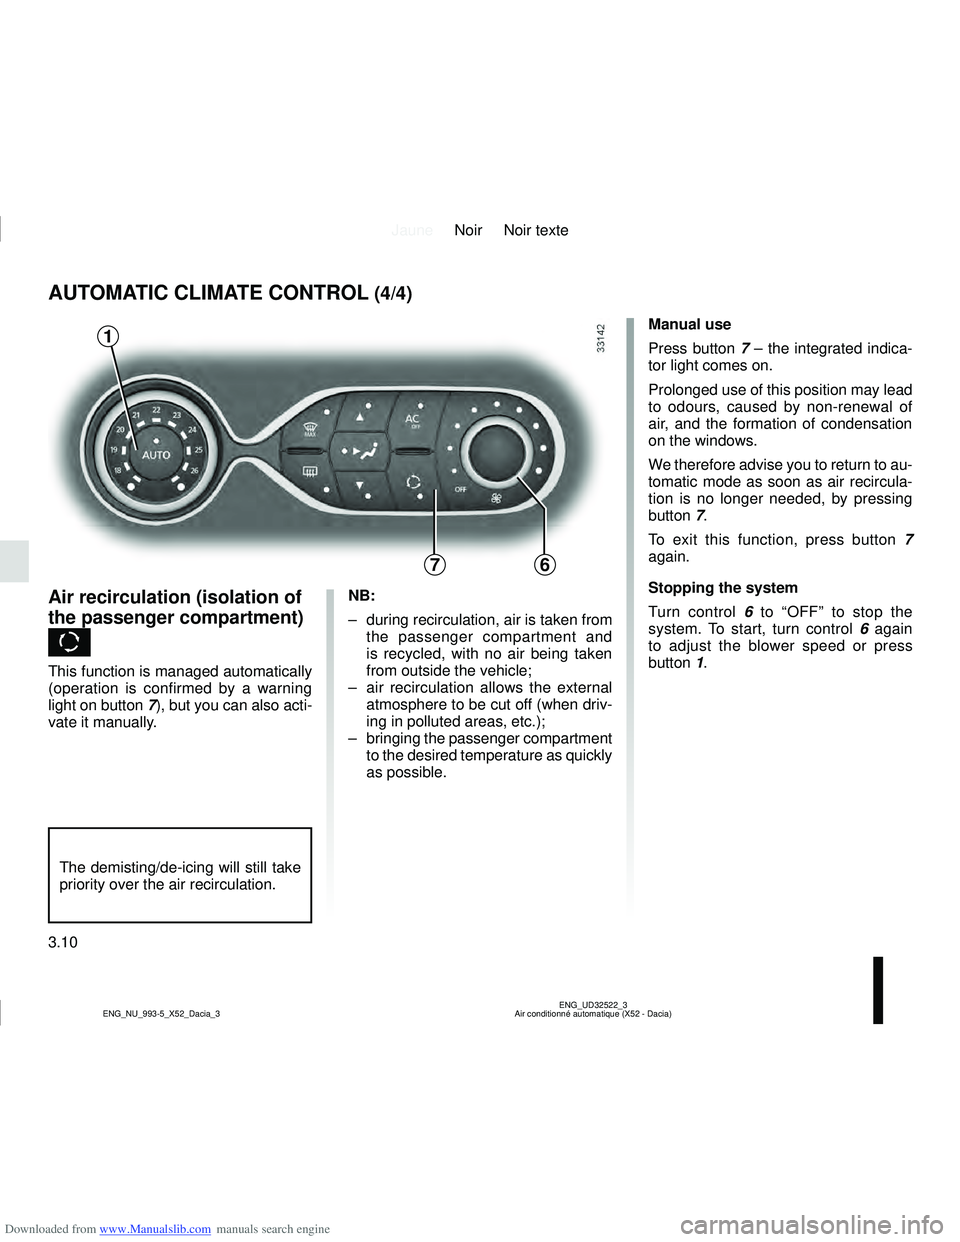 DACIA SANDERO 2010  Owners Manual Downloaded from www.Manualslib.com manuals search engine JauneNoir Noir texte
3.10
ENG_UD32522_3
Air conditionné automatique (X52 - Dacia)
ENG_NU_993-5_X52_Dacia_3
AUTOMATIC CLIMATE CONTROL (4/4)
76
